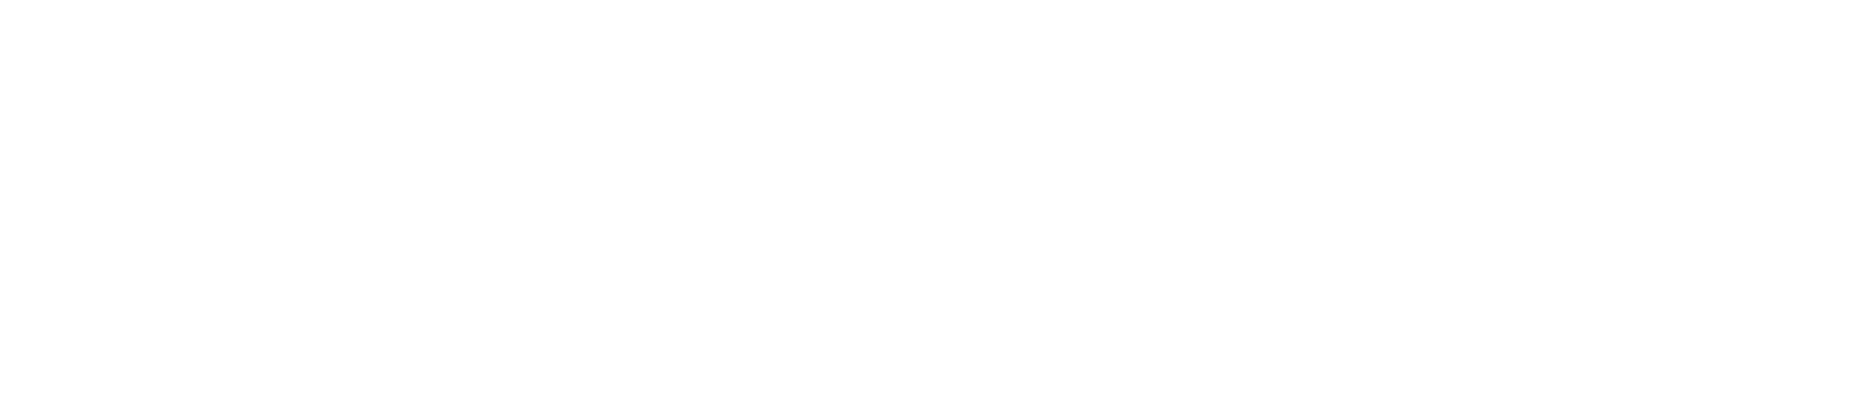 Mediation Matters Logo in White